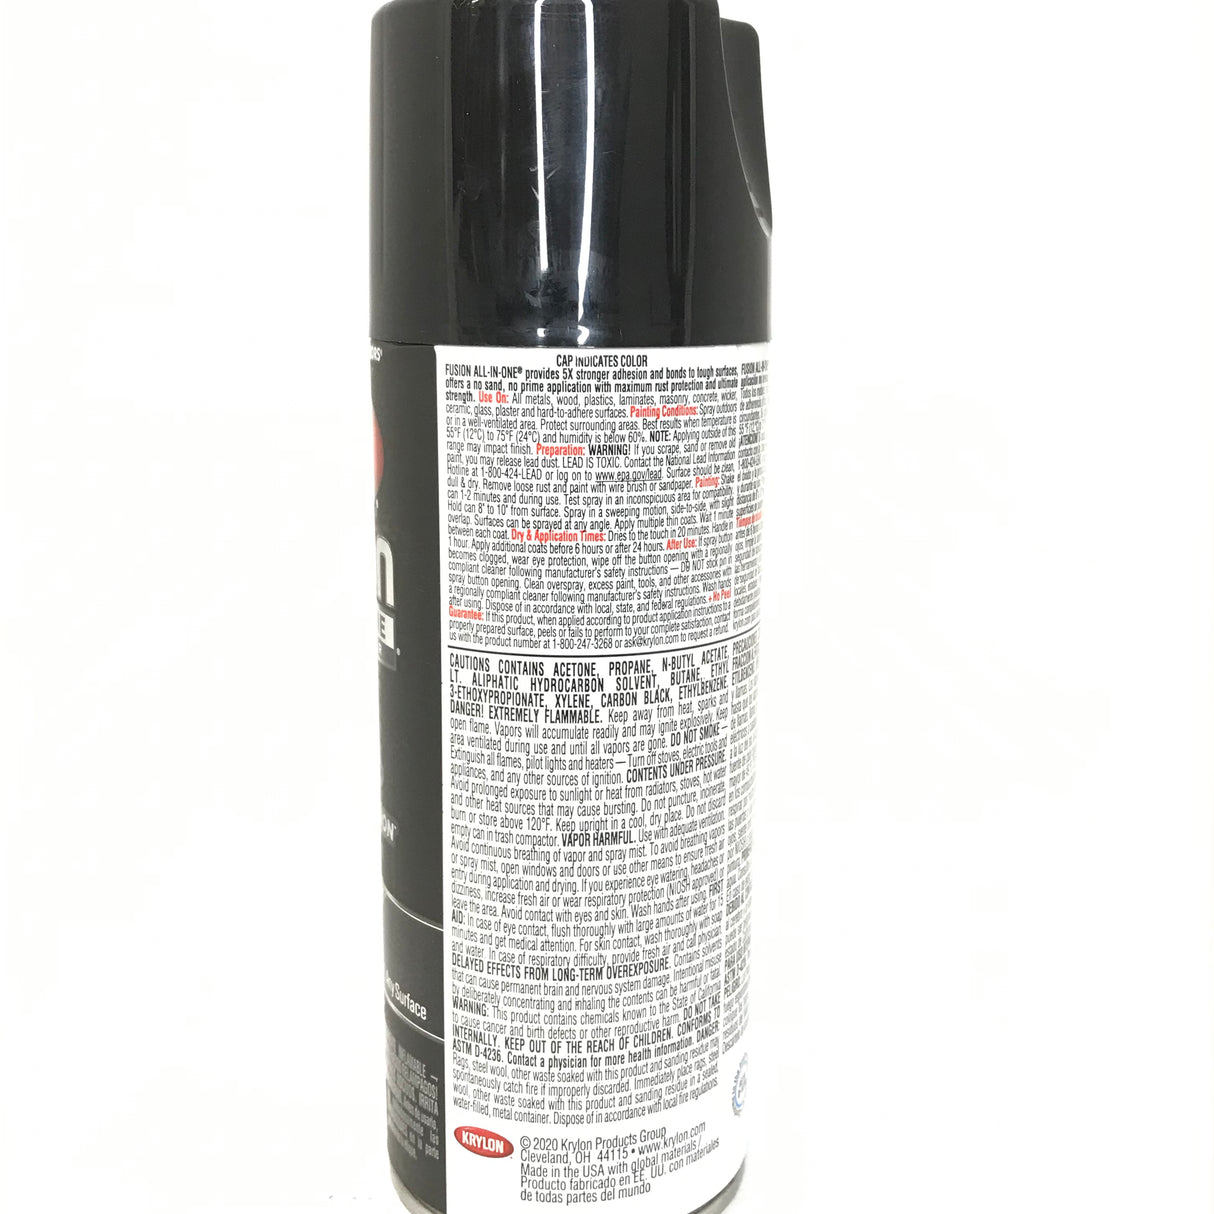 KRYLON 2702-4 PACK GLOSS BLACK All-In-One Fusion Paint & Primer - No Peel - 12 oz Aerosol